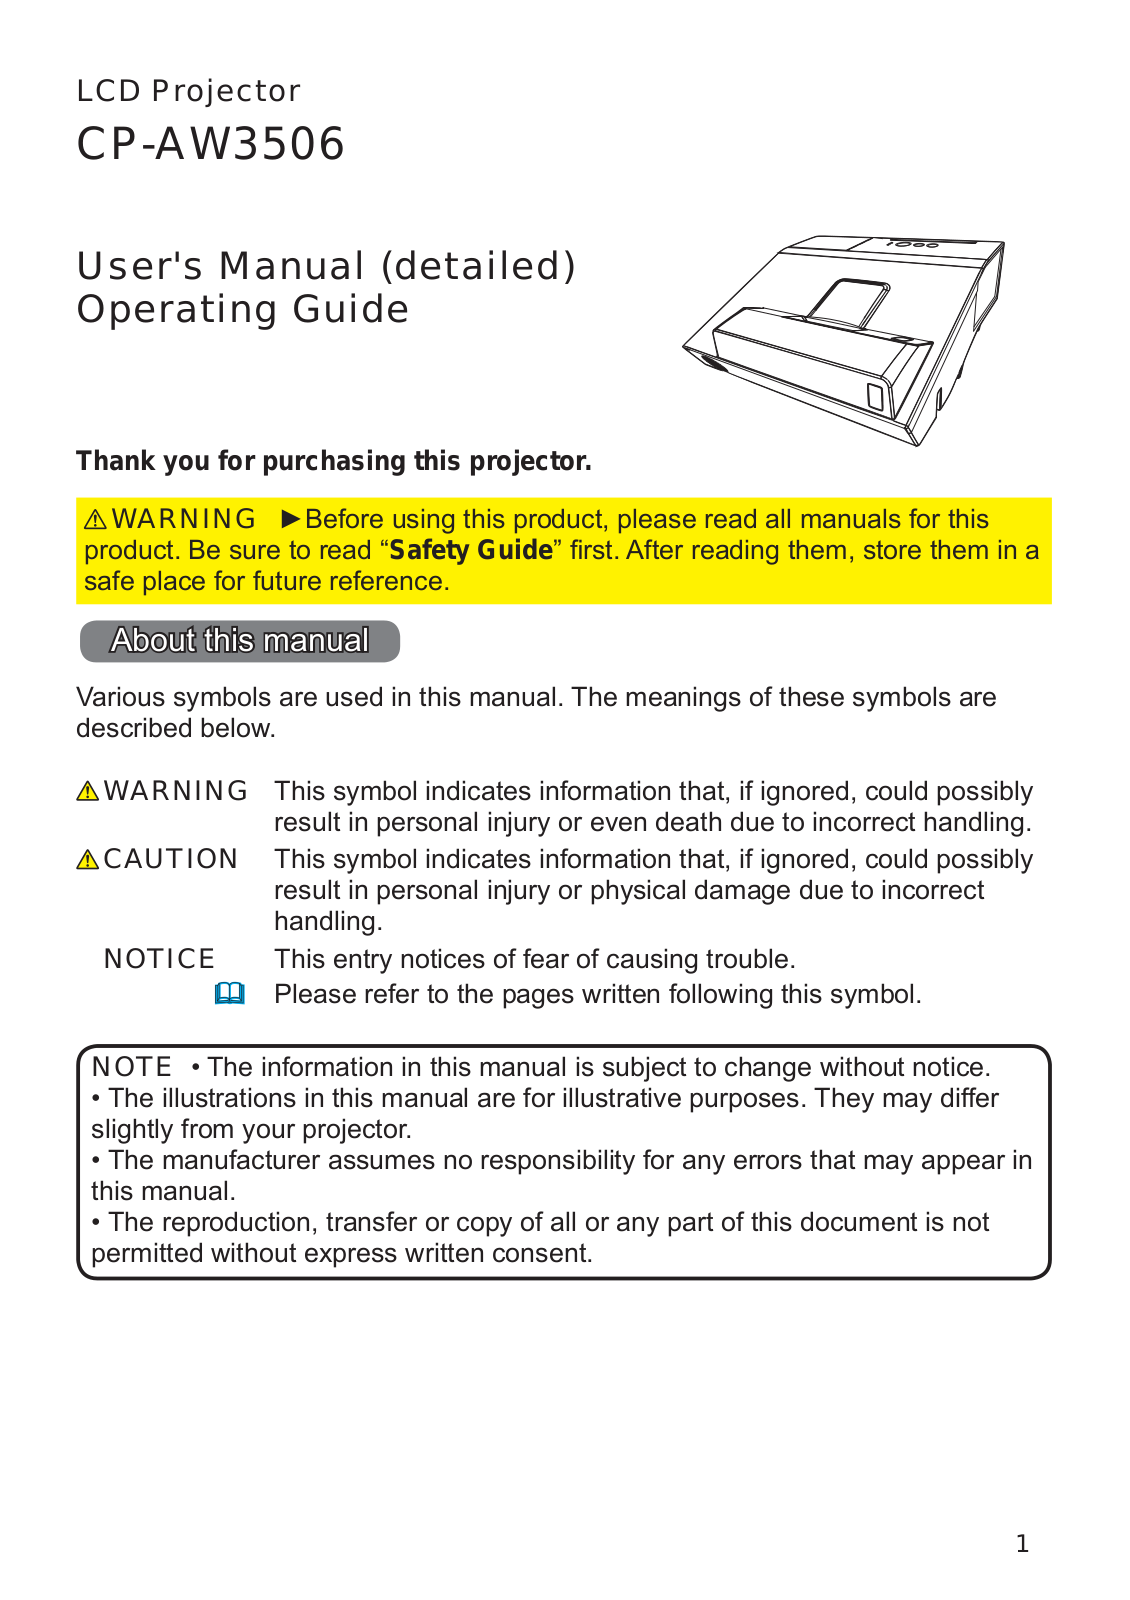 Hitachi CP-AW3506 User Manual